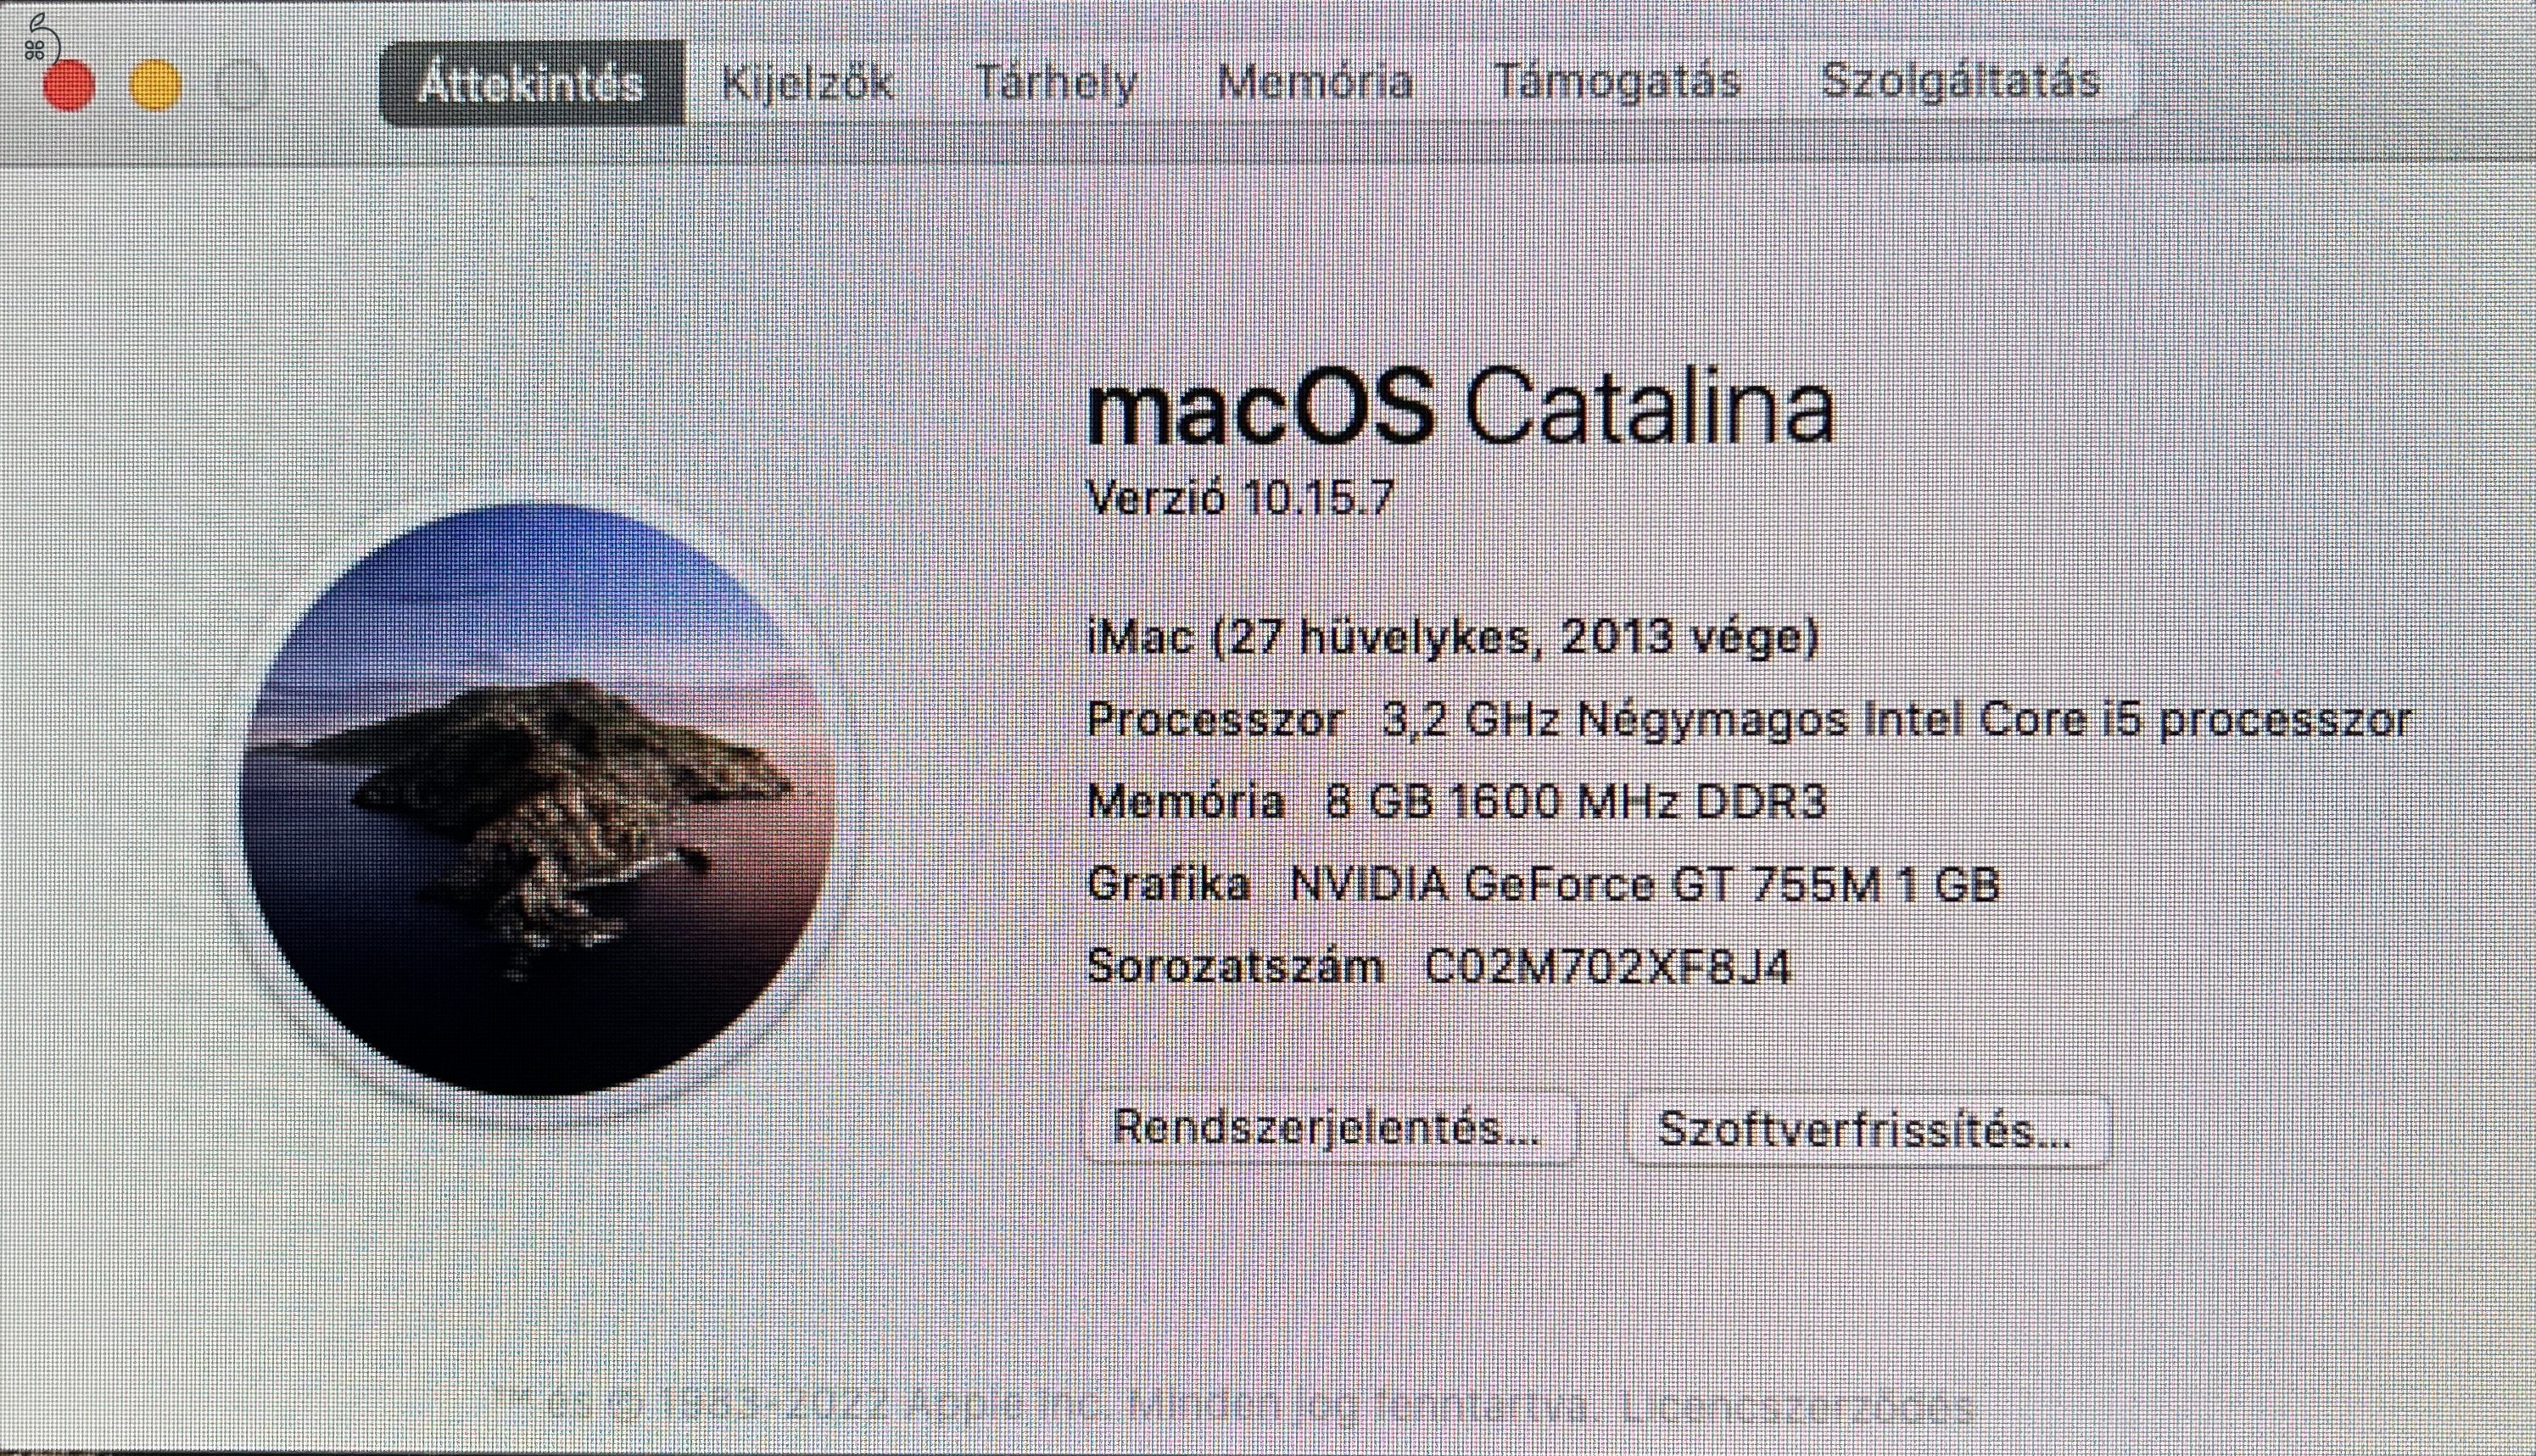 iMac27 2013Late